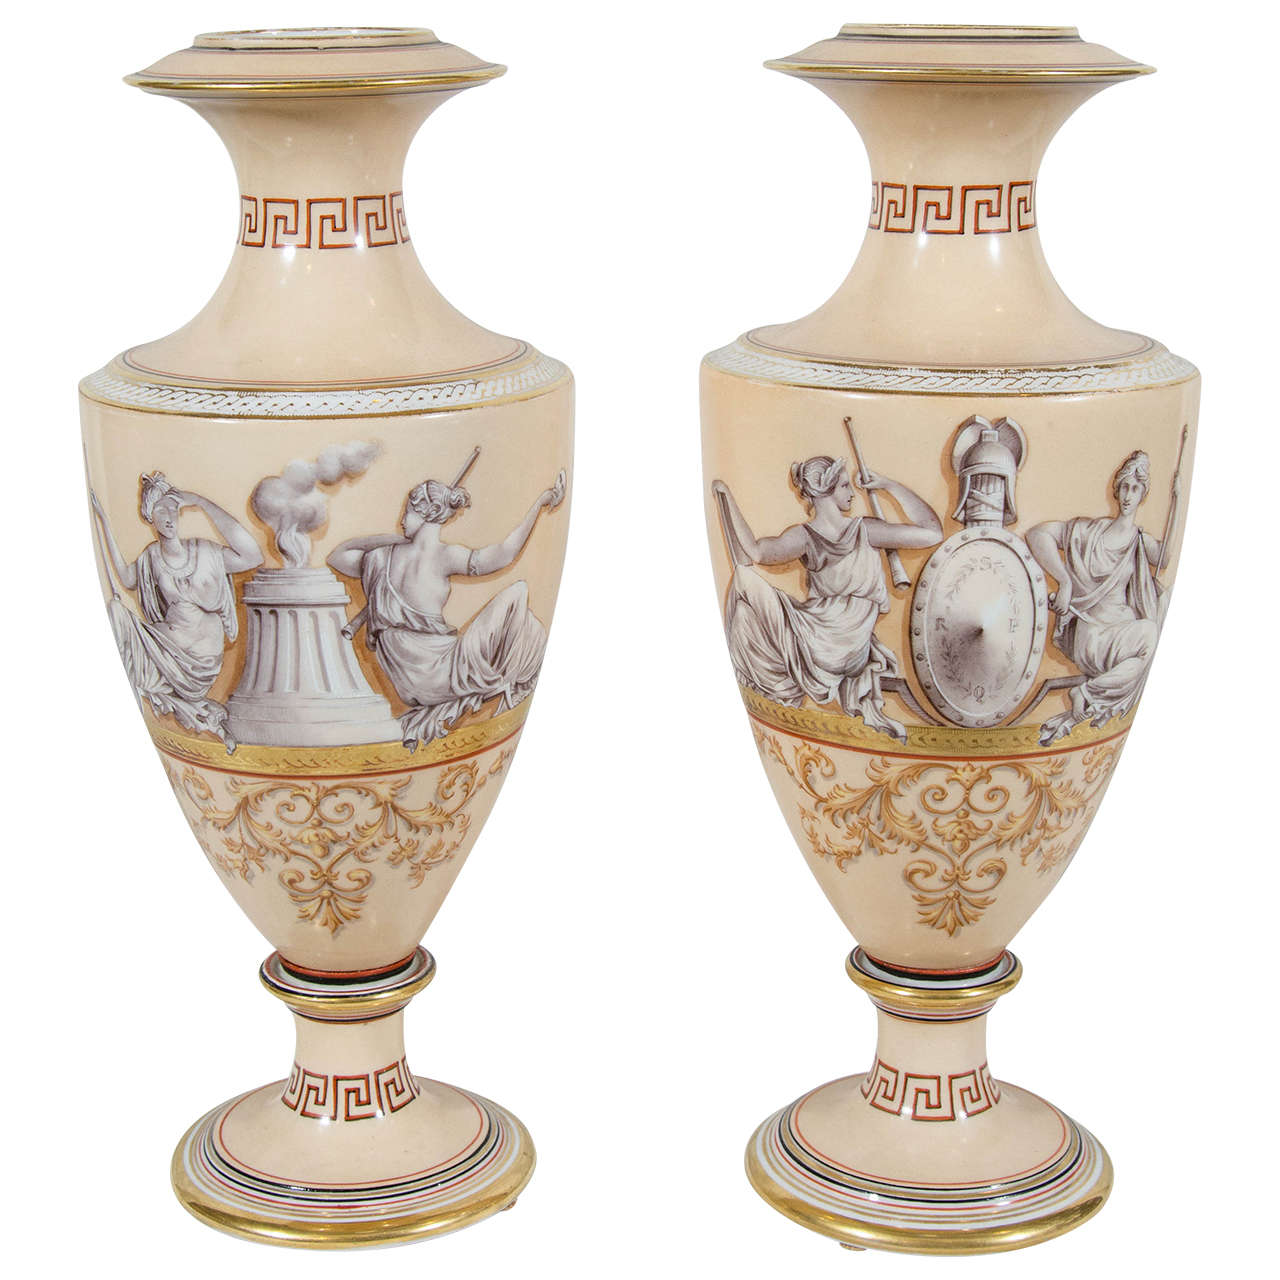  English Neoclassical Porcelain Vases Greek Figures & Greek Key Made circa 1820